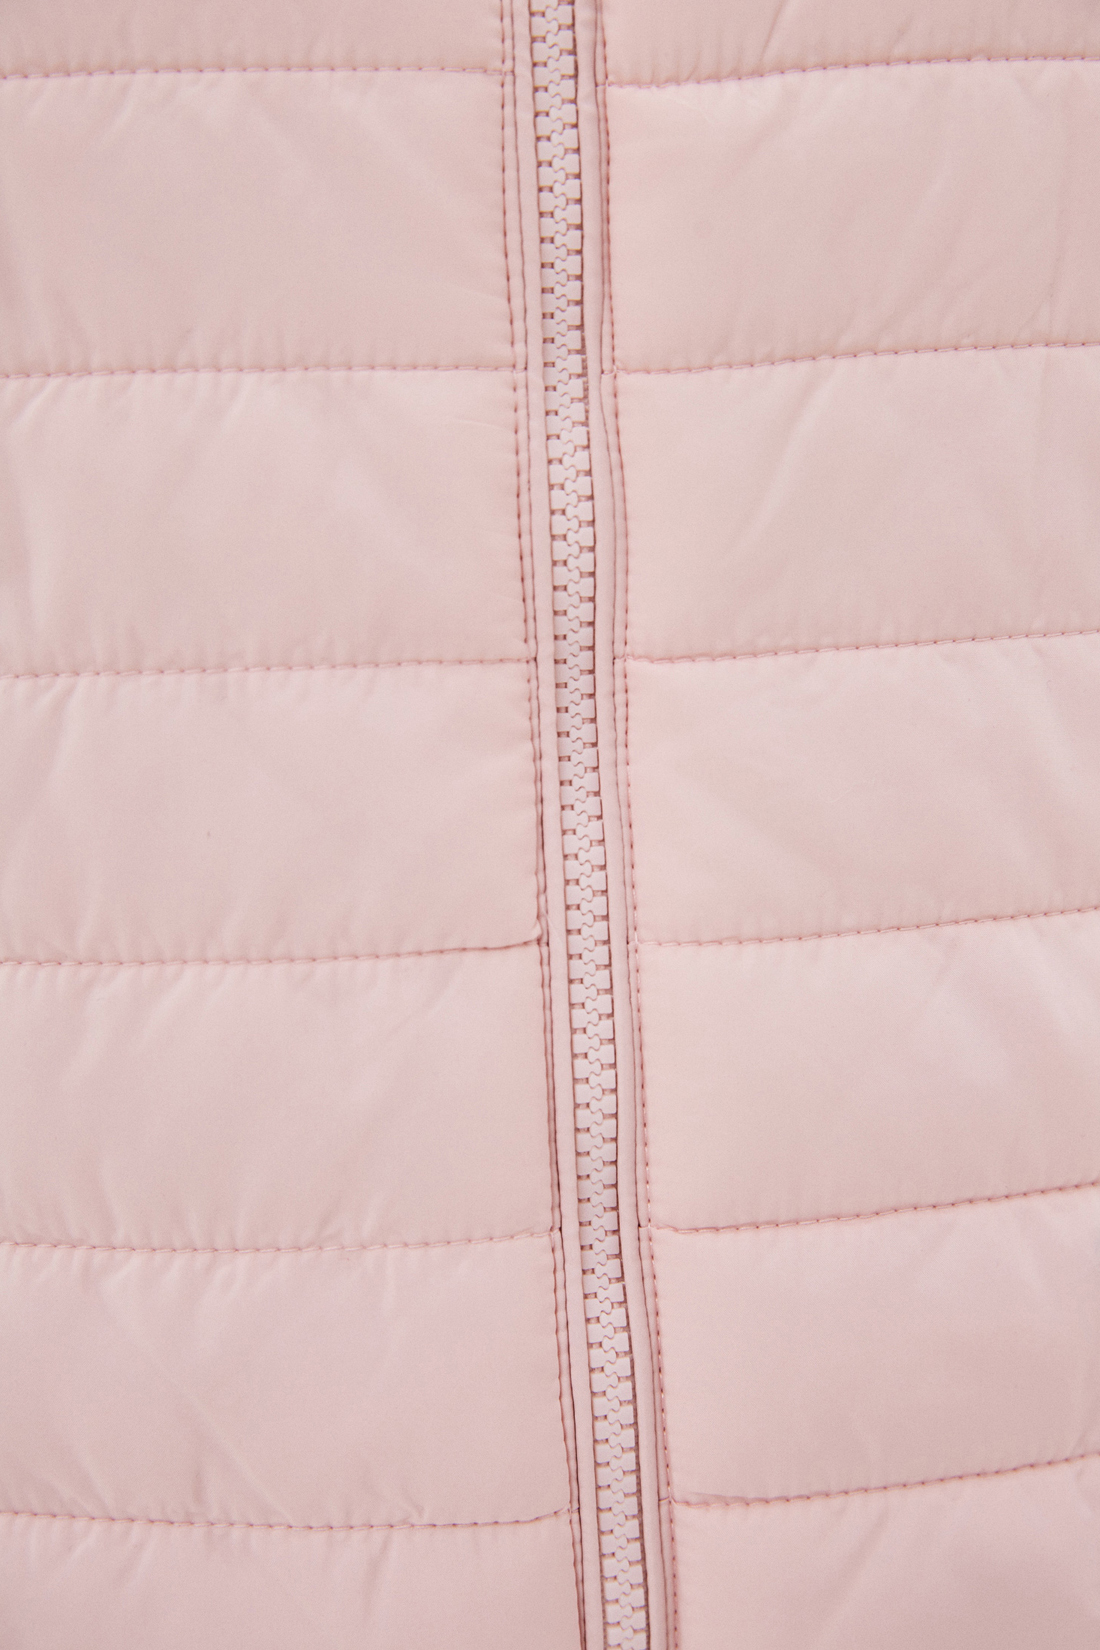 Базовый жилет (арт. baon B150202), размер XL, цвет розовый Базовый жилет (арт. baon B150202) - фото 4